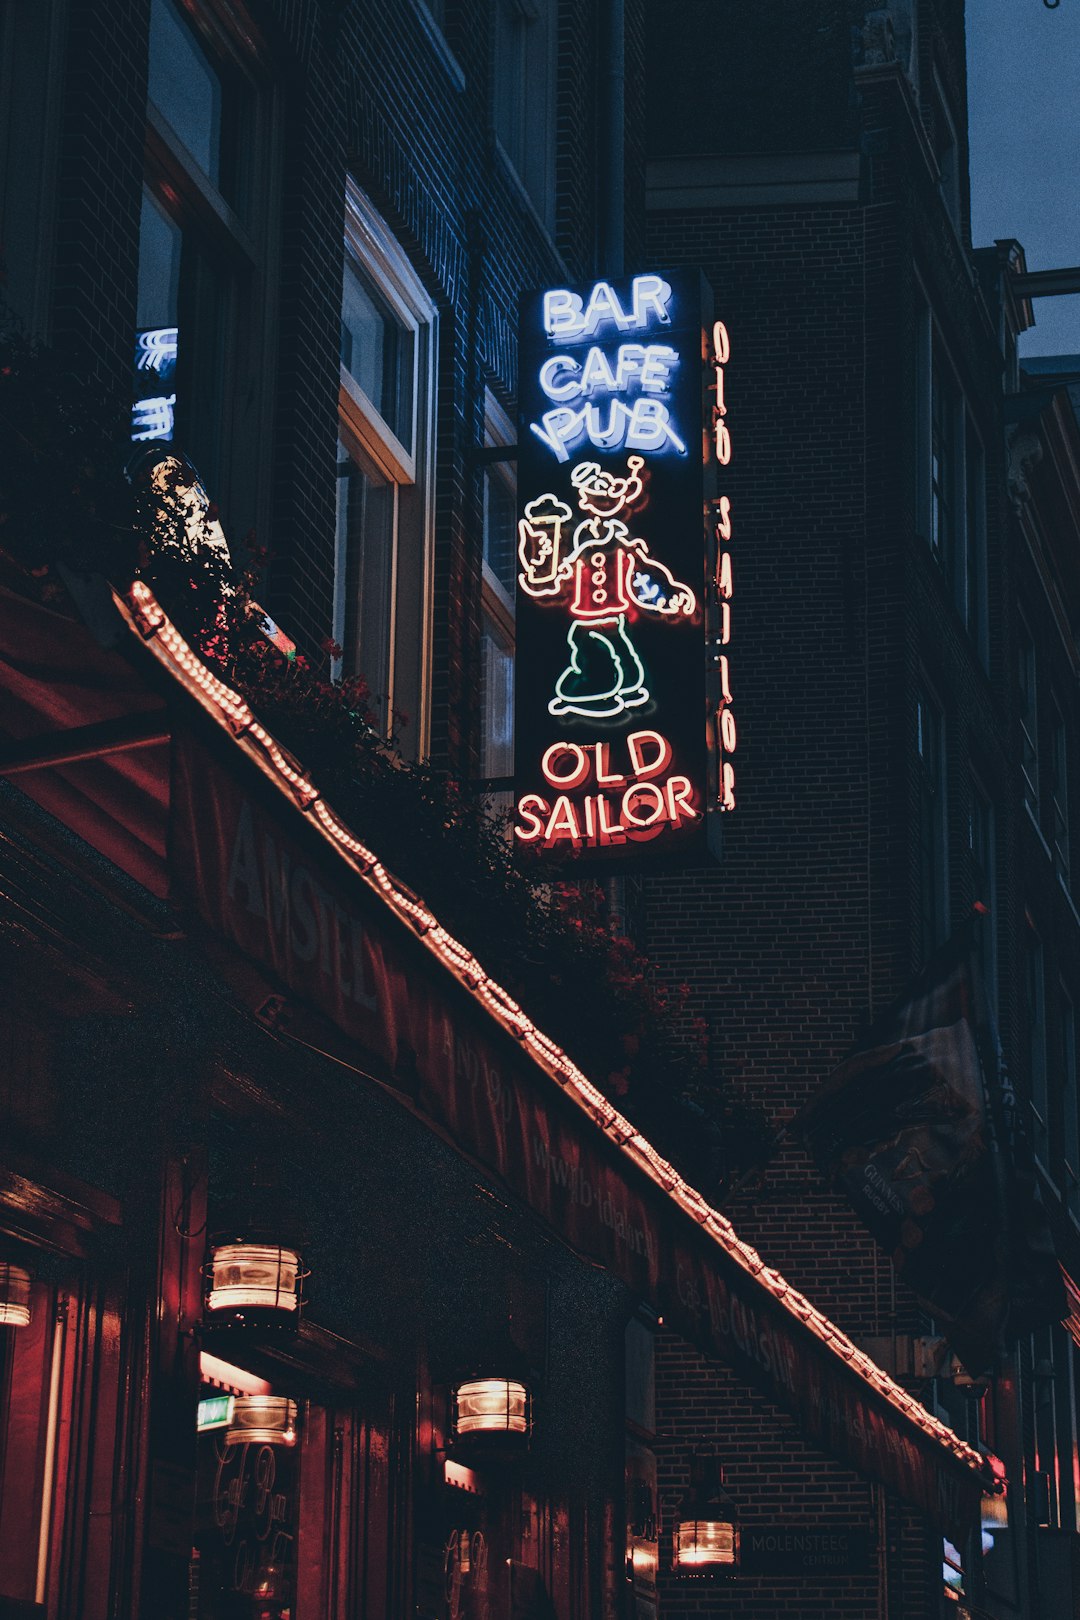 shallow focus photo of lighted bar cafe pub signage